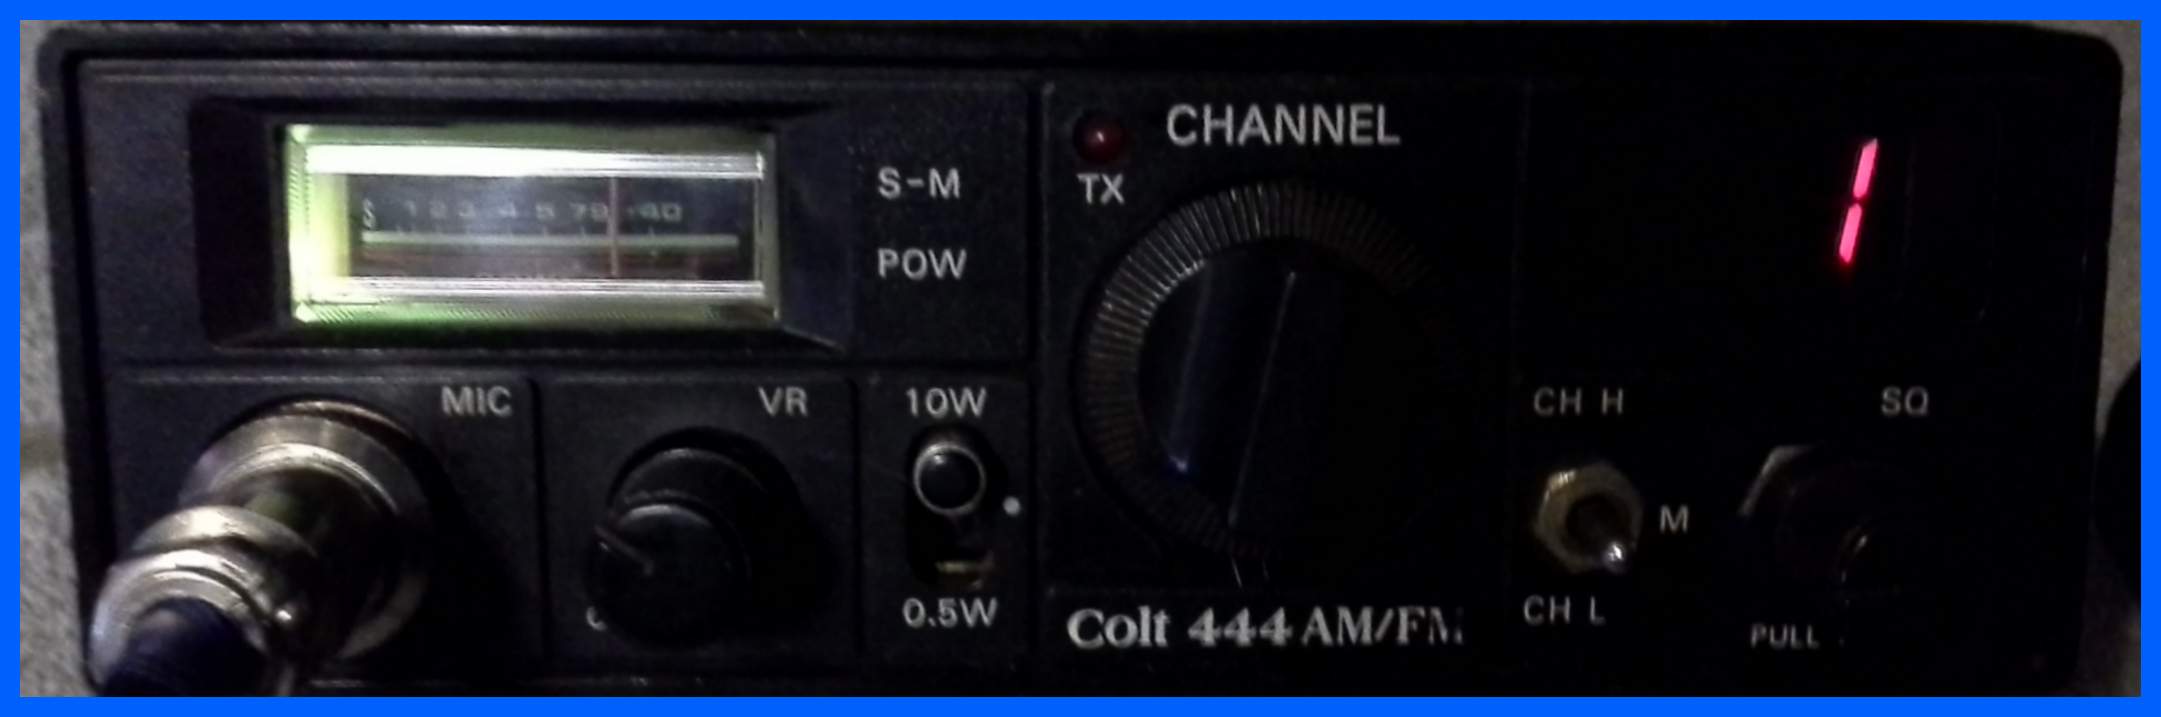 Colt 444 AM/FM Radio (Receiving)